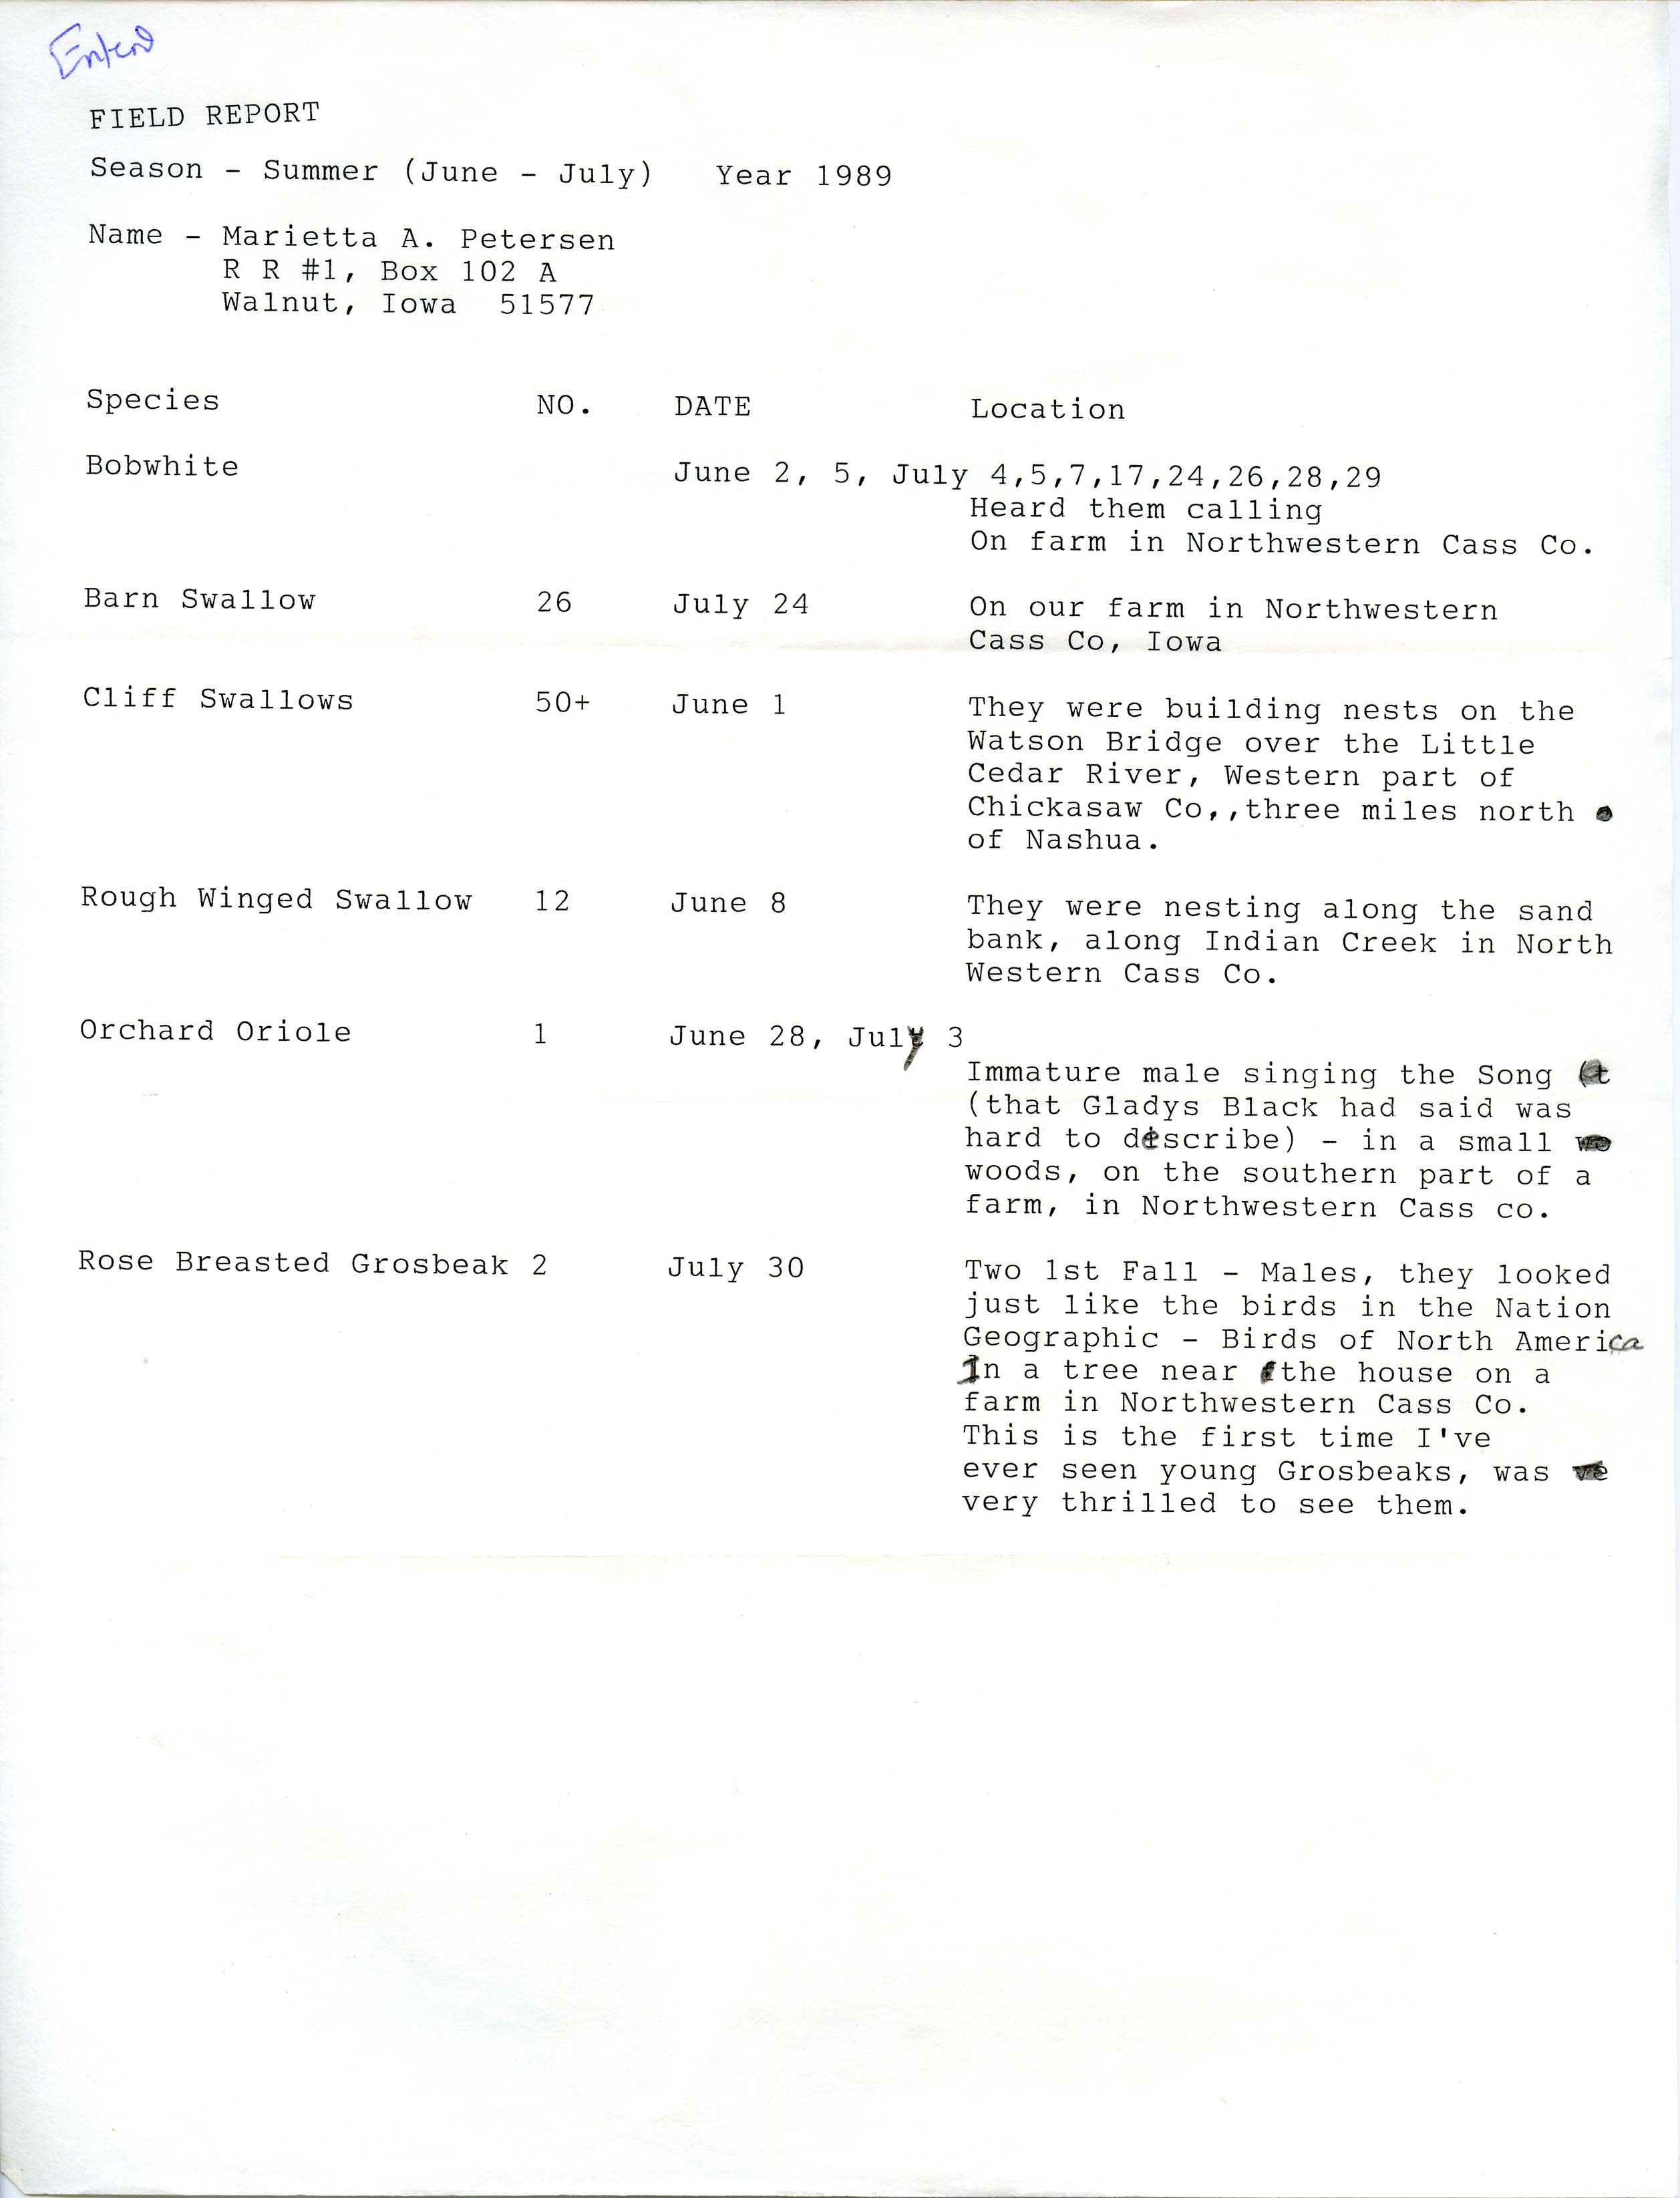 Field notes contributed by Marietta Petersen, summer 1989